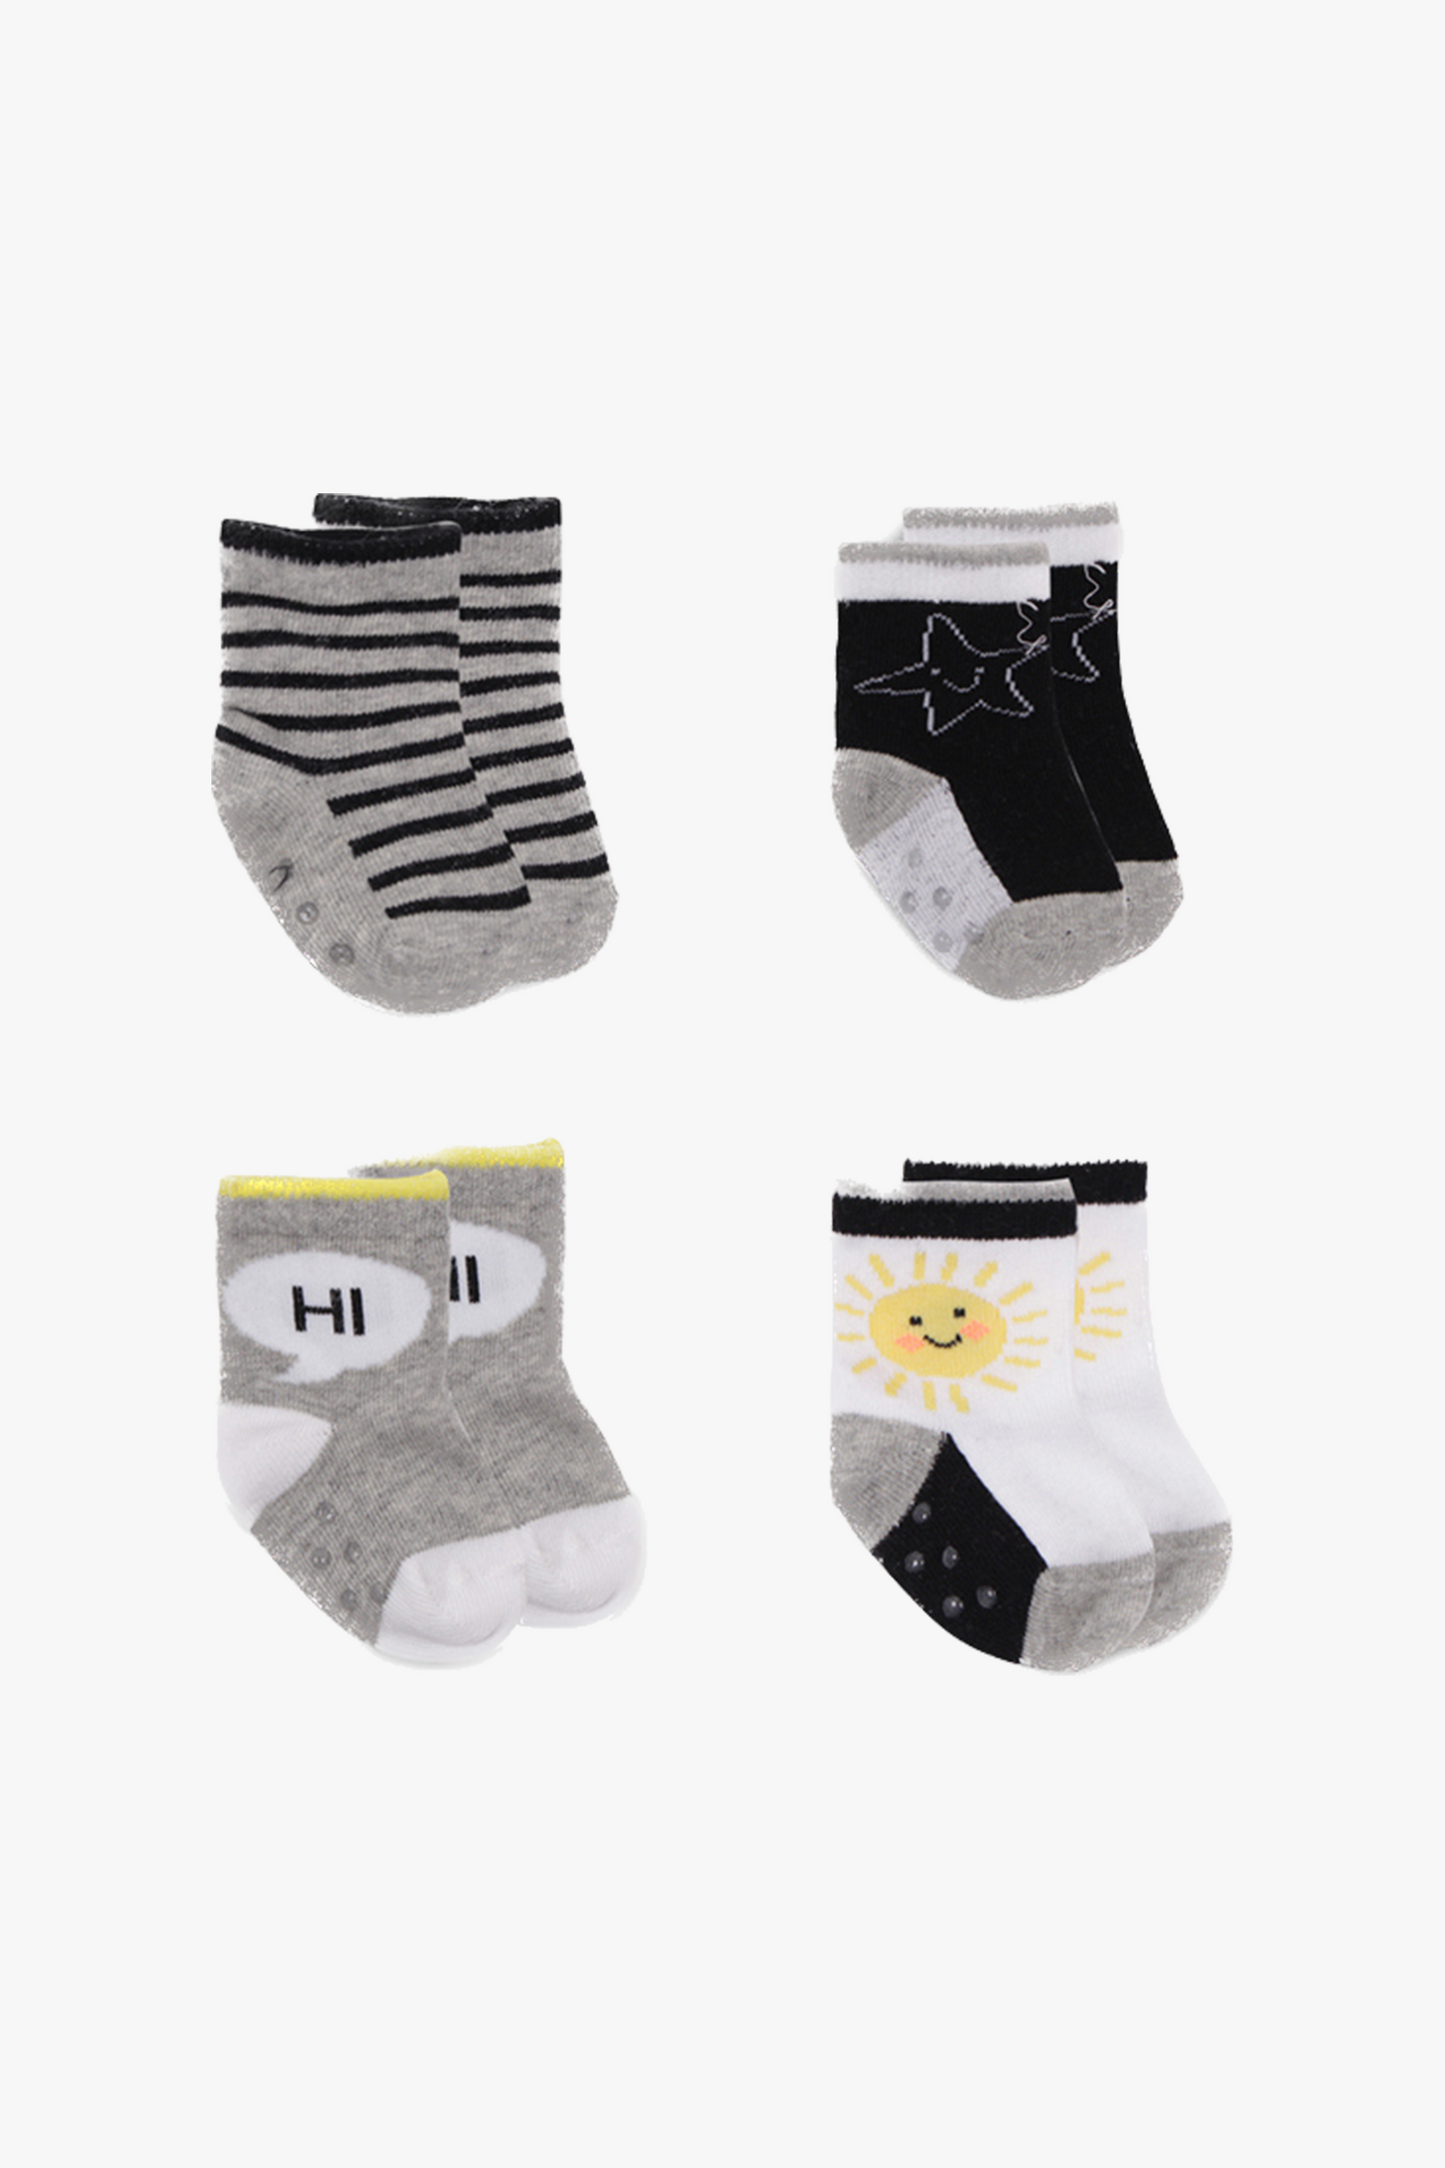 Snugabye Baby 4 Pack Black & White Socks